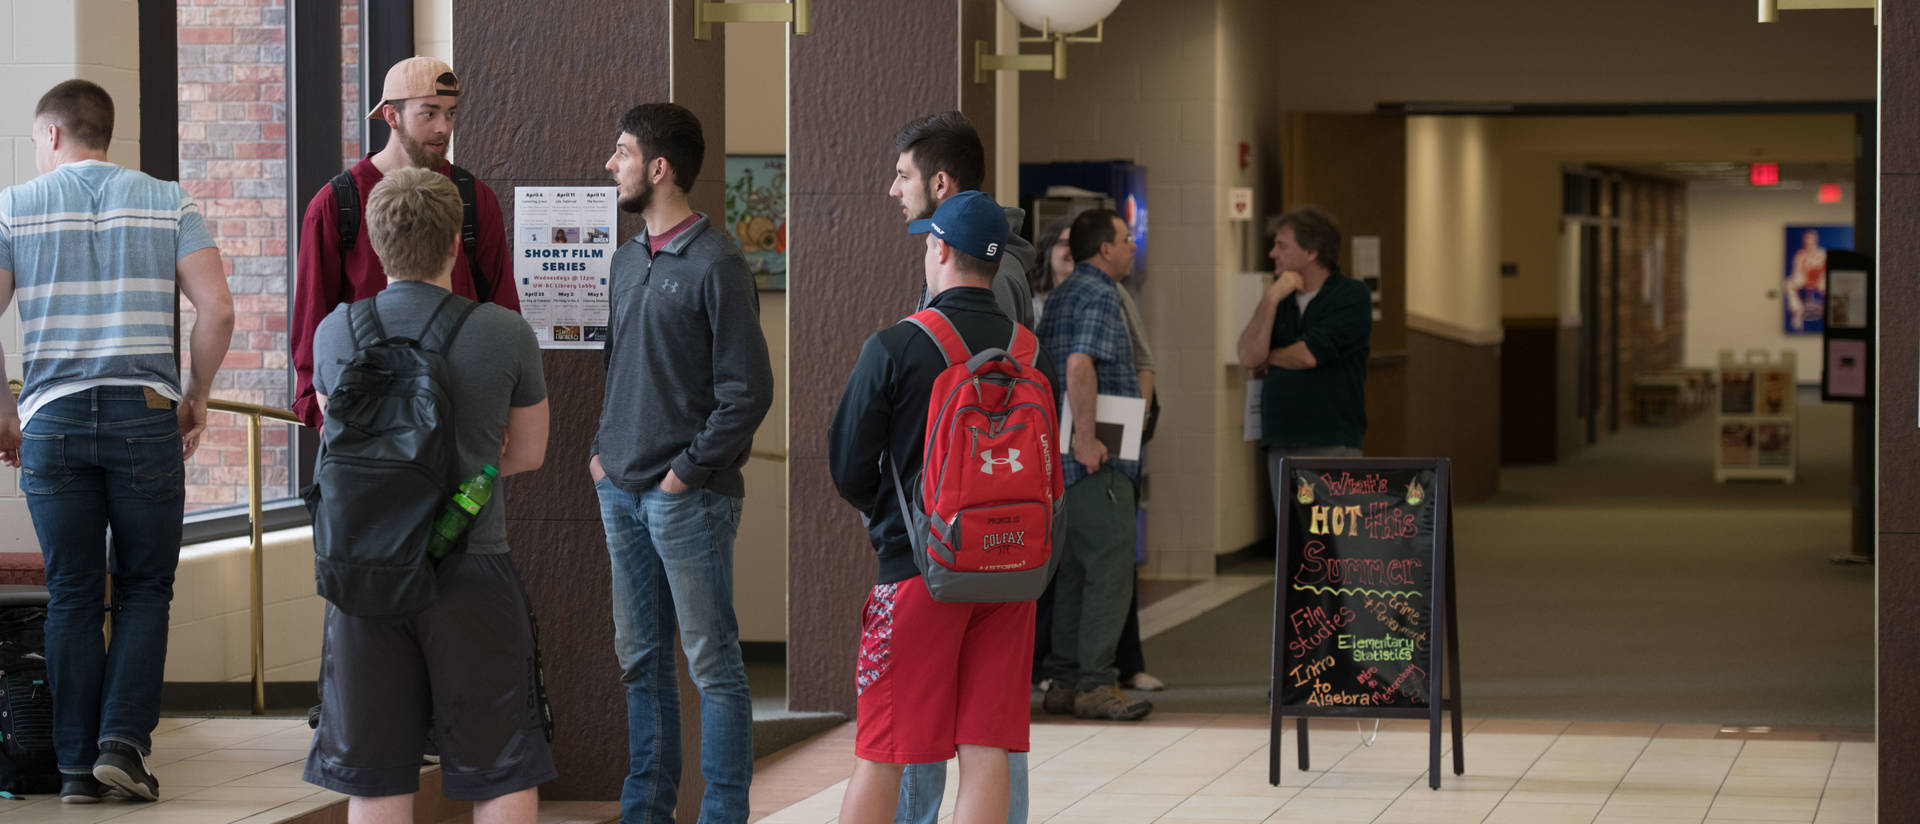 Students gathered in hallway of Ritzinger Hall in UW-Barron County